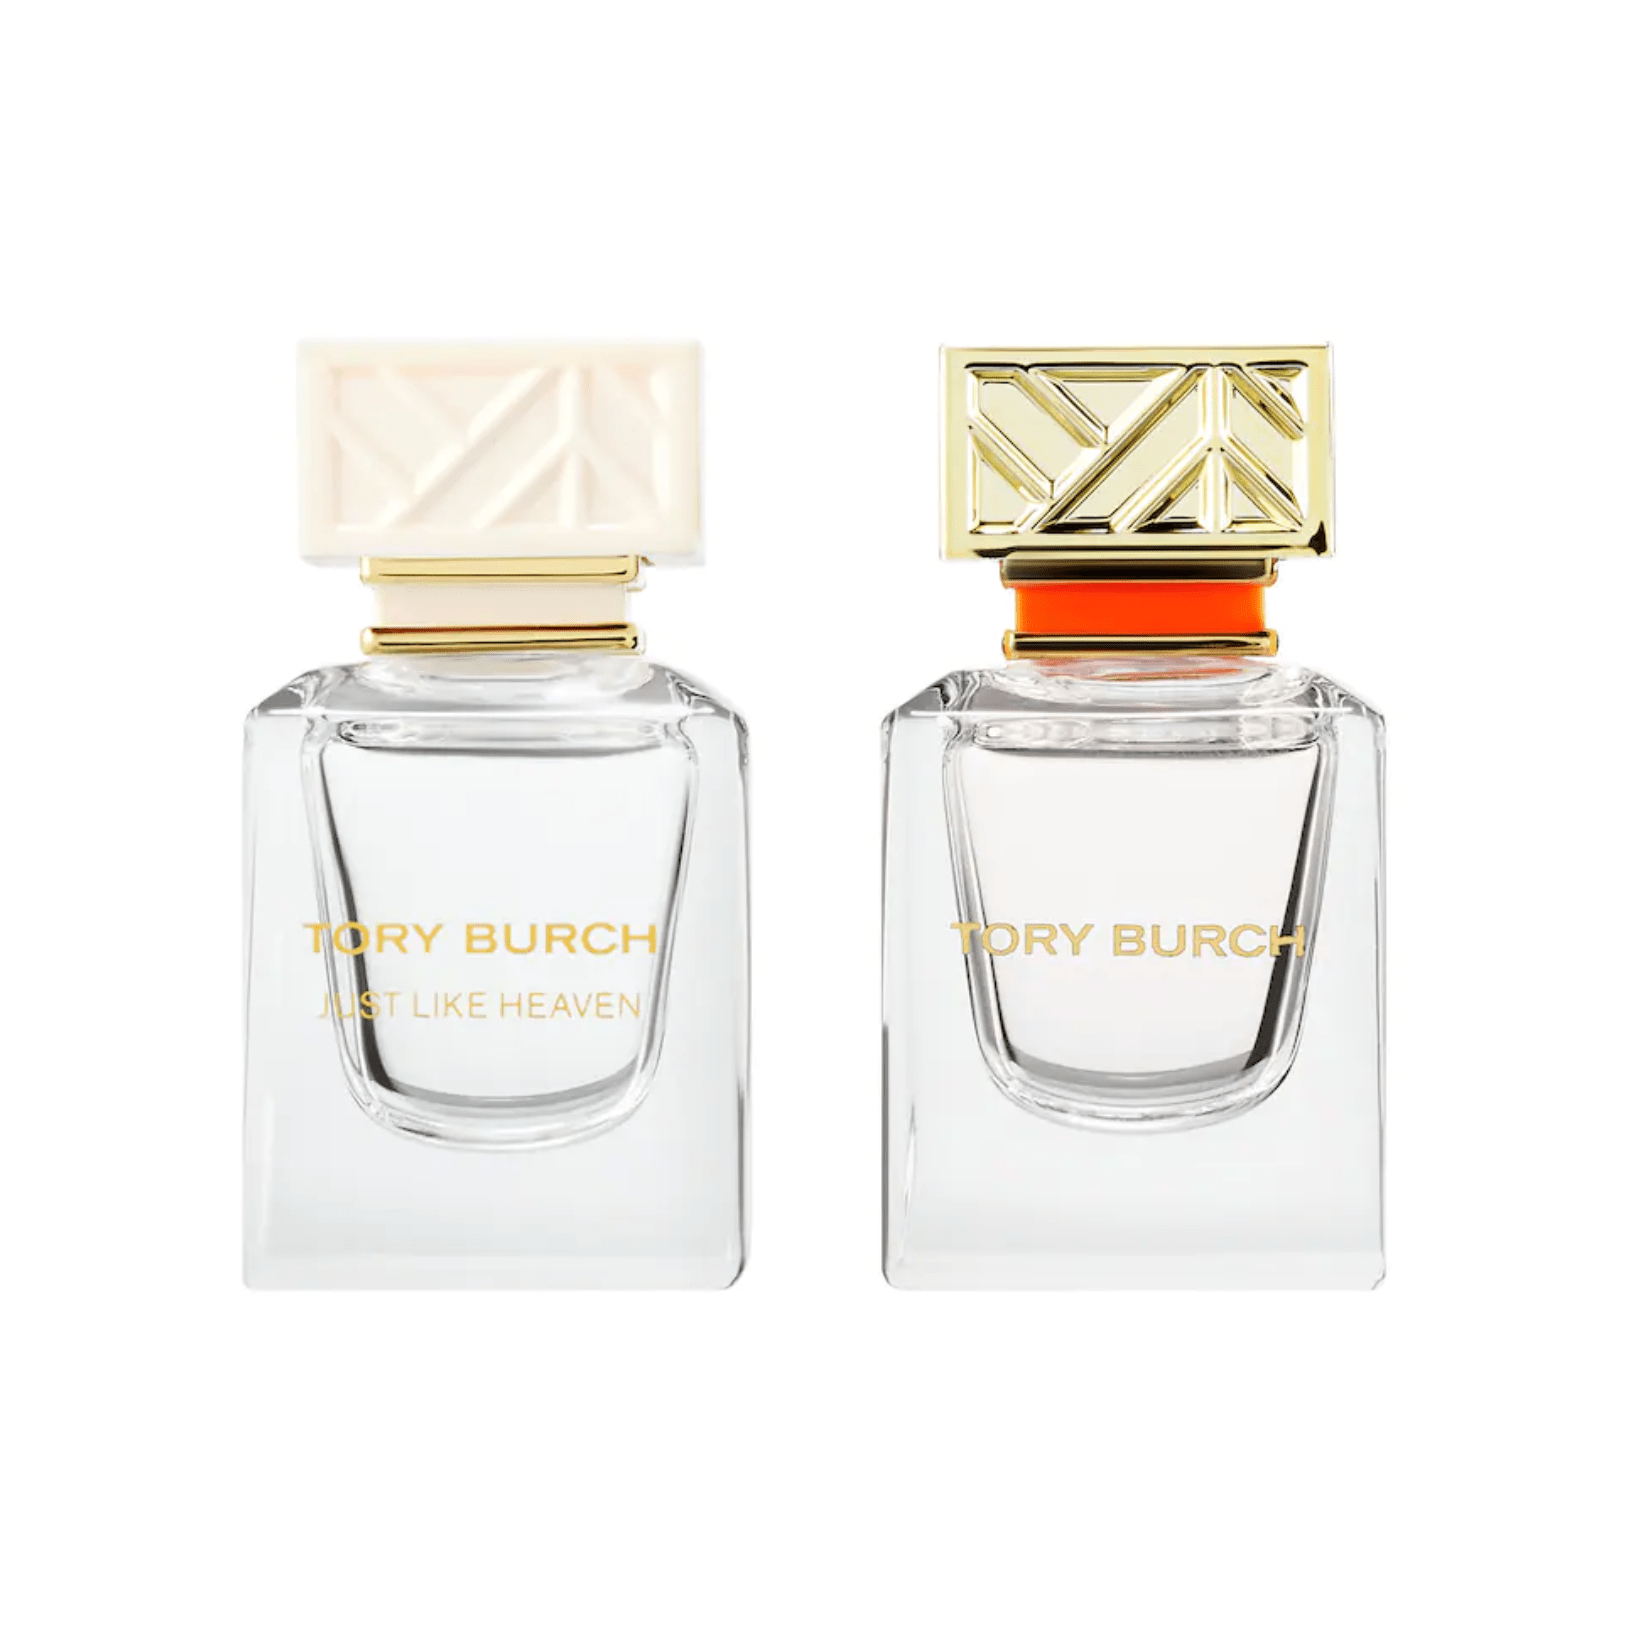 Tory Burch Mini Perfume set - Alzak